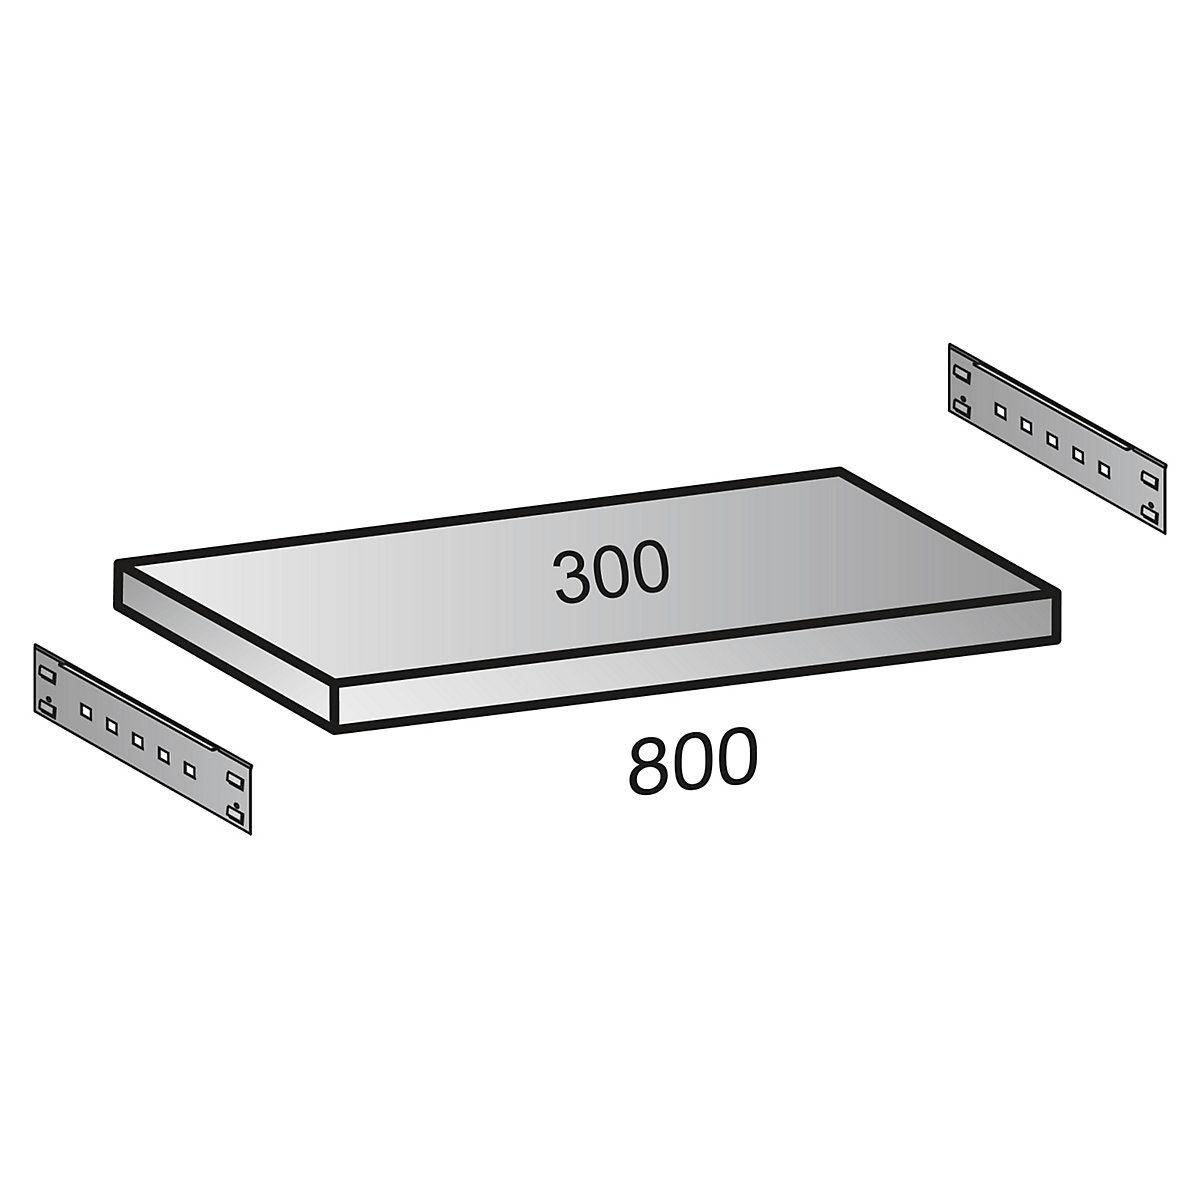 Shelf for industrial boltless shelf unit, shelf width 800 mm, depth 300 mm